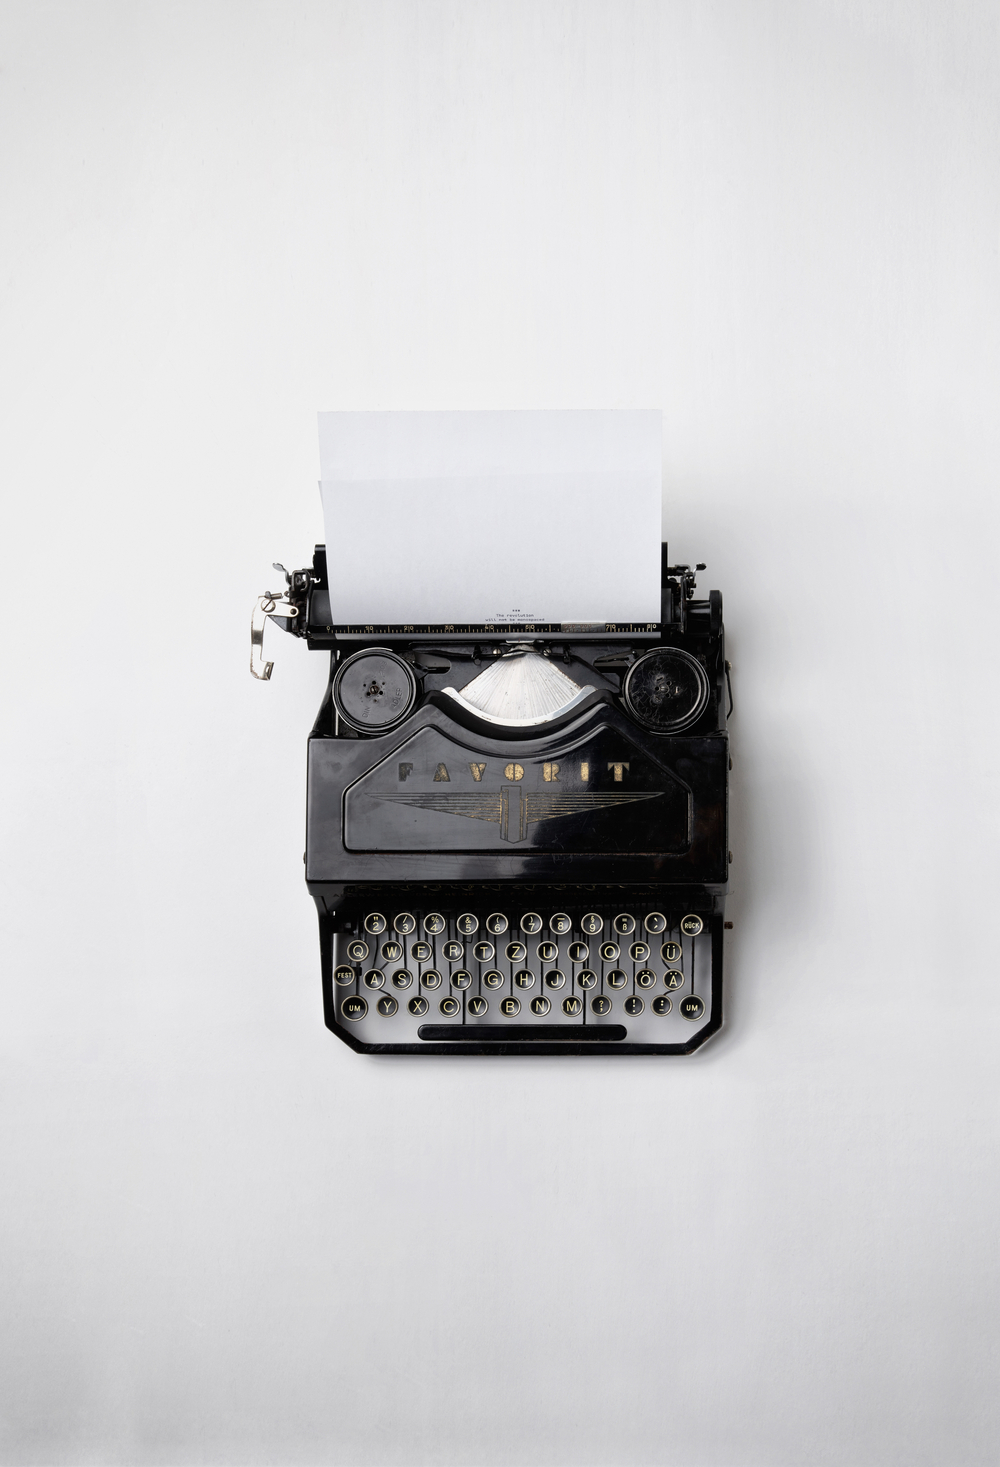 Black typewriter on white background